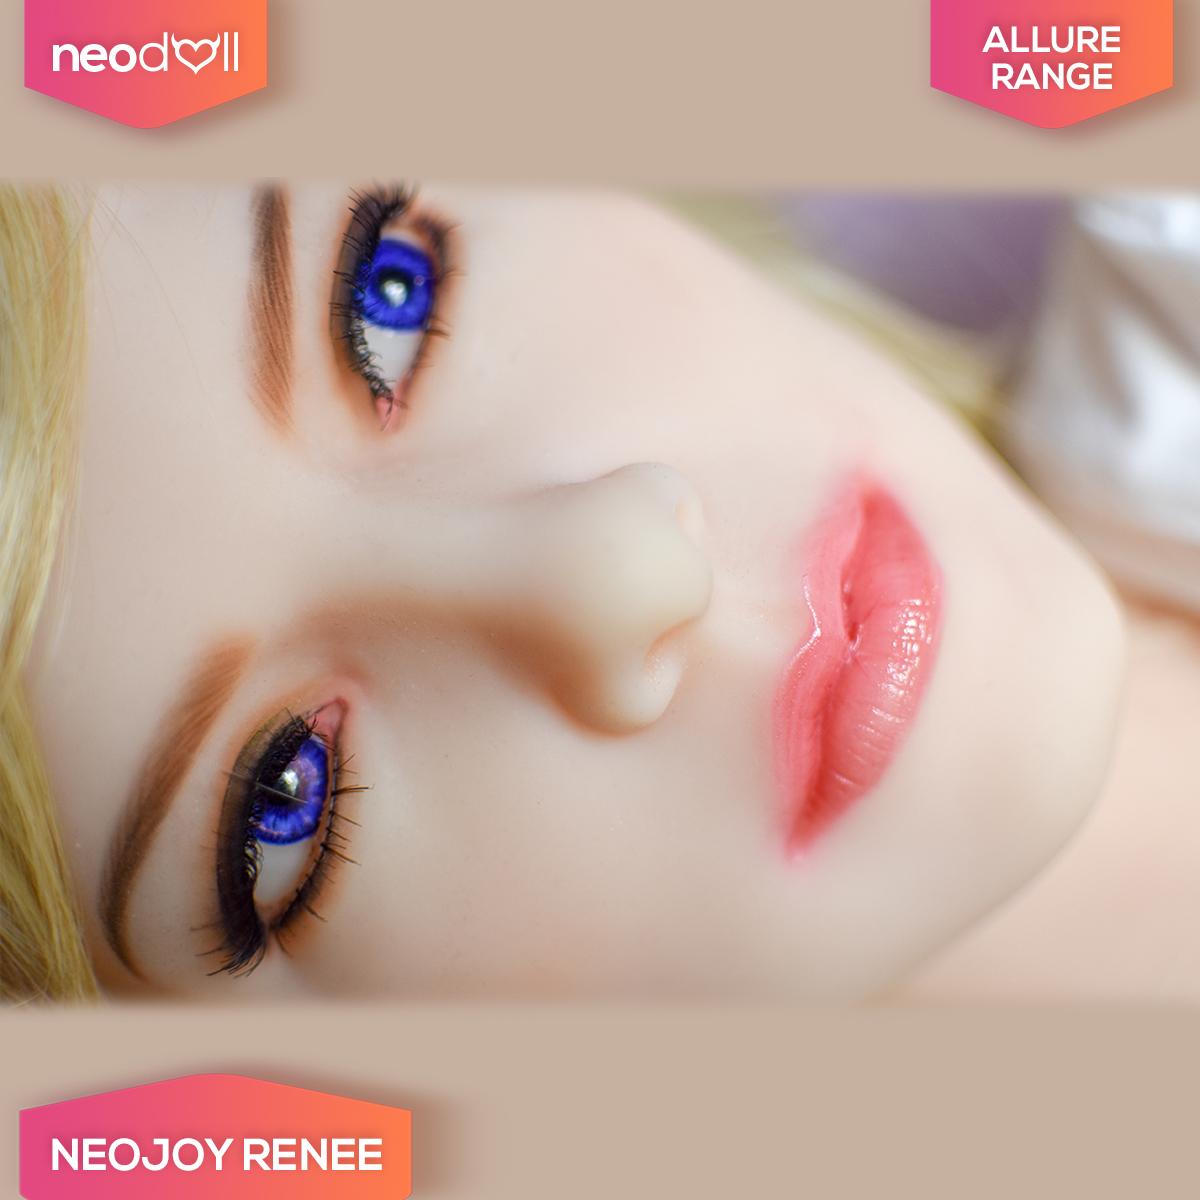 Neodoll Allure Renee - Realistic Sex Doll - 160cm - Natural